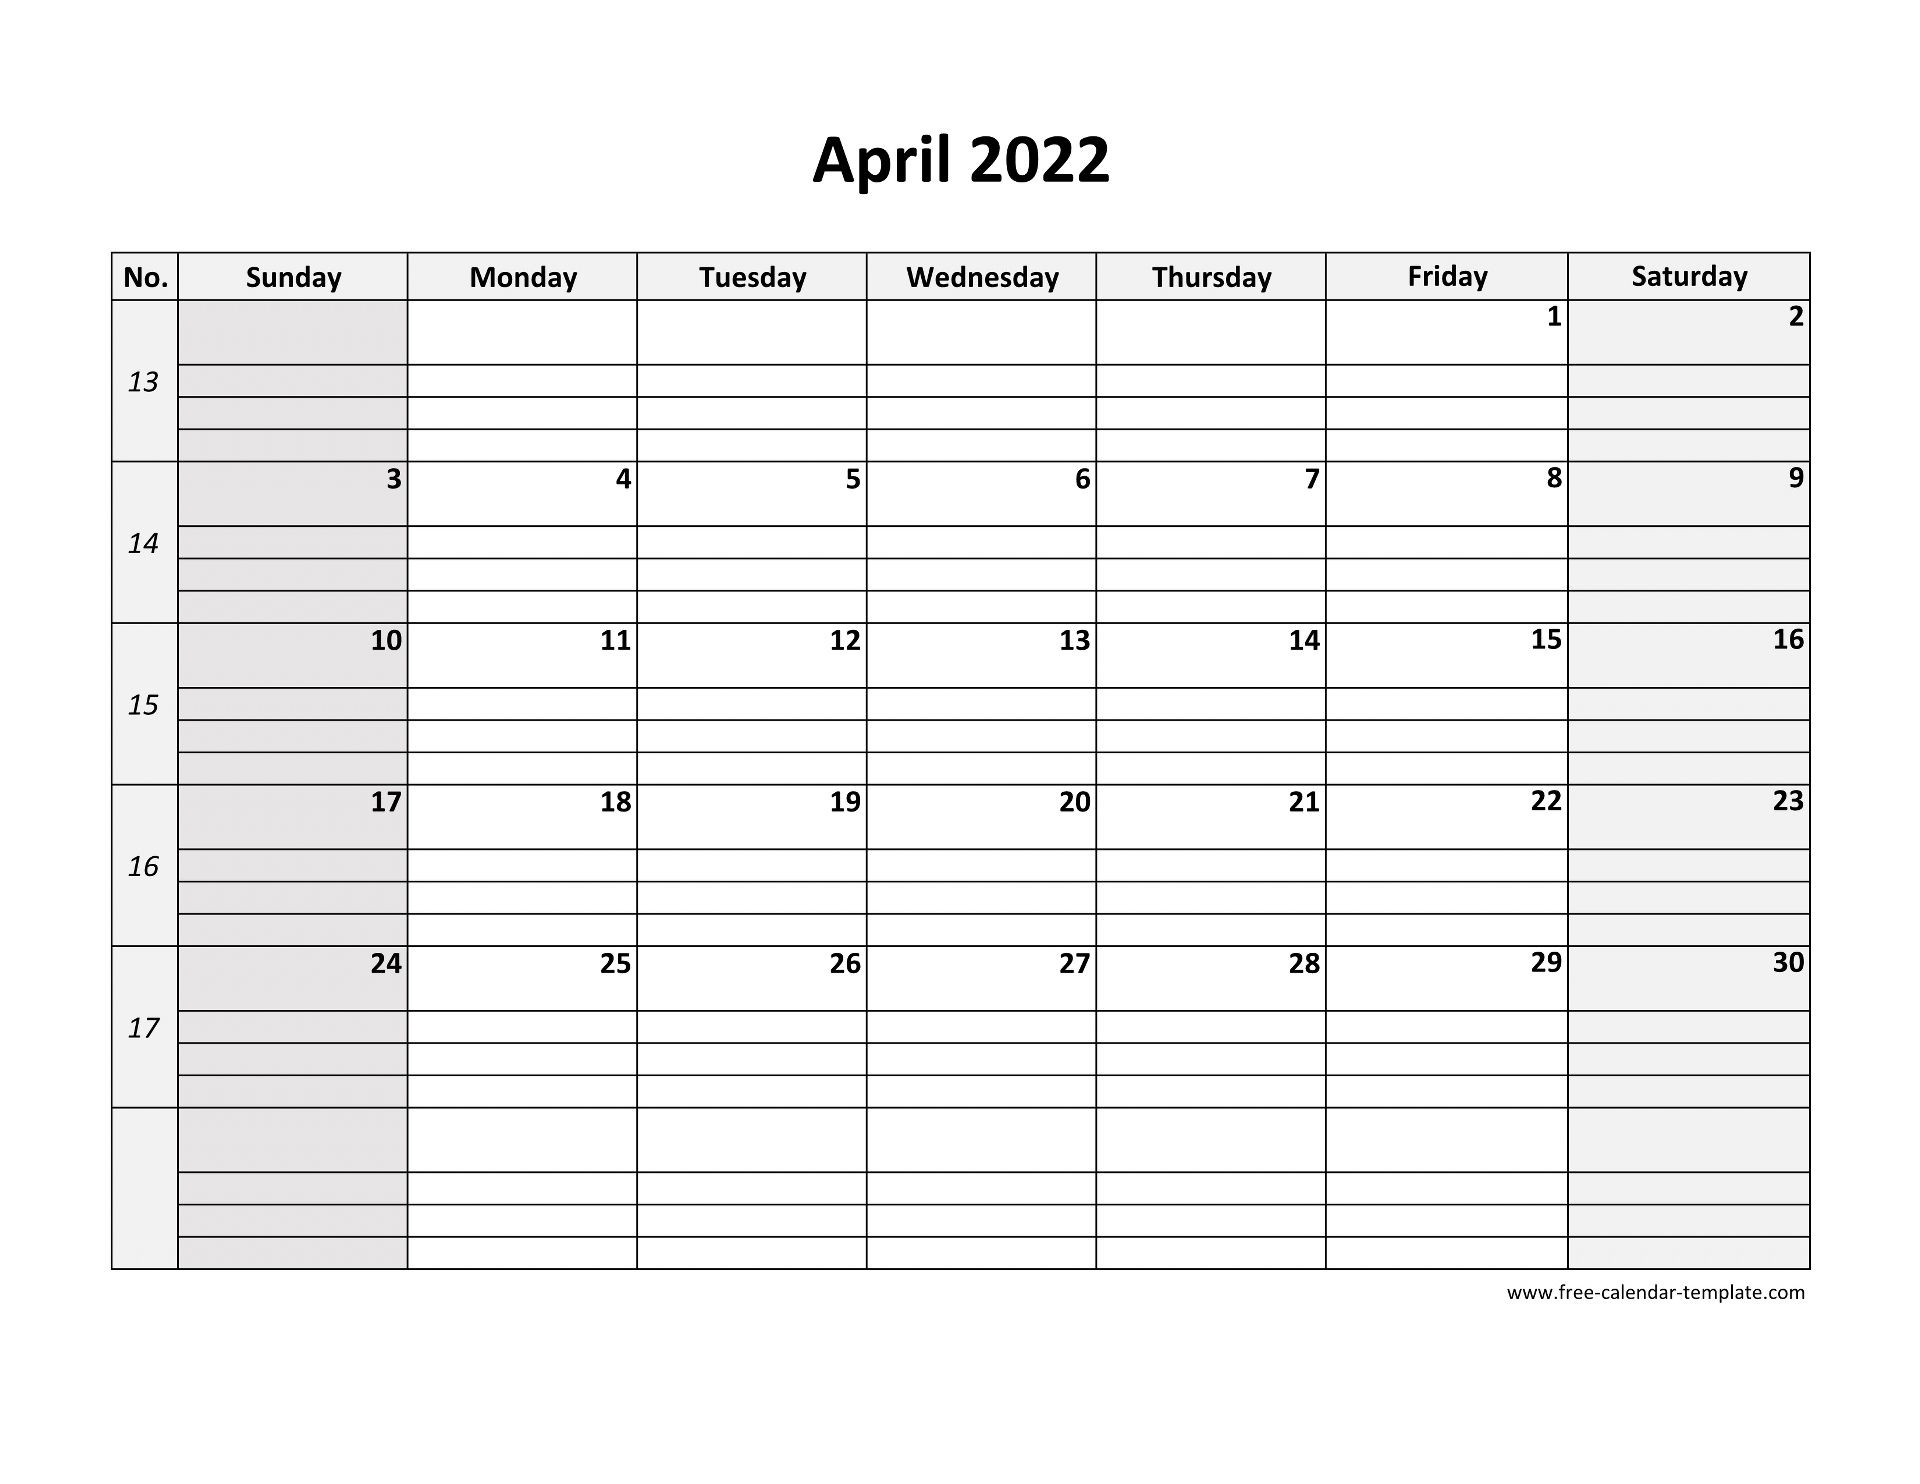 April 2022 Free Calendar Tempplate | Free-Calendar  November 2022 To April 2022 Calendar